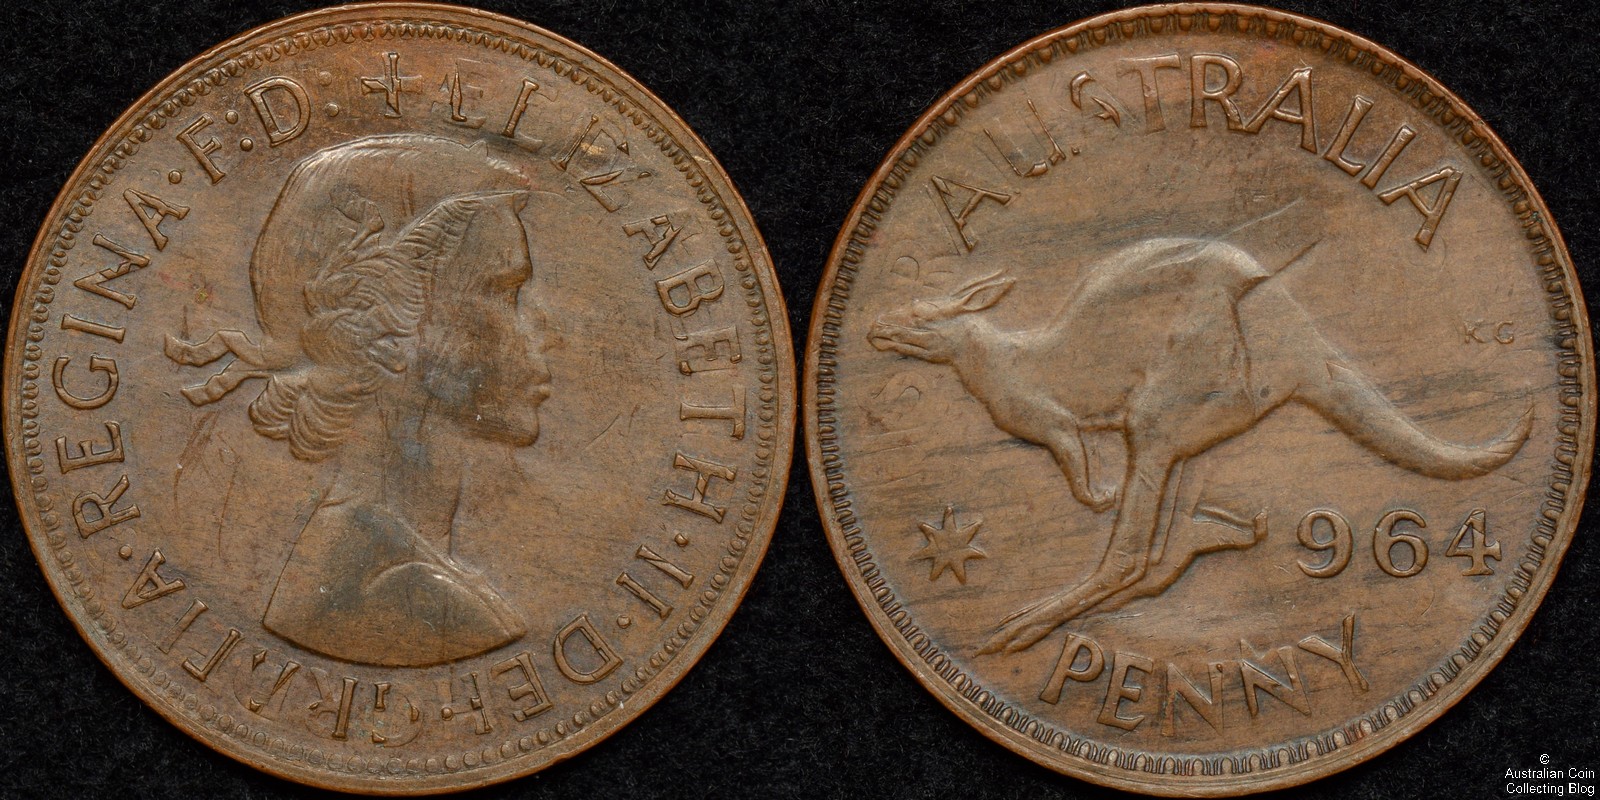 Australian 1964 Penny - Rotated Double Strike